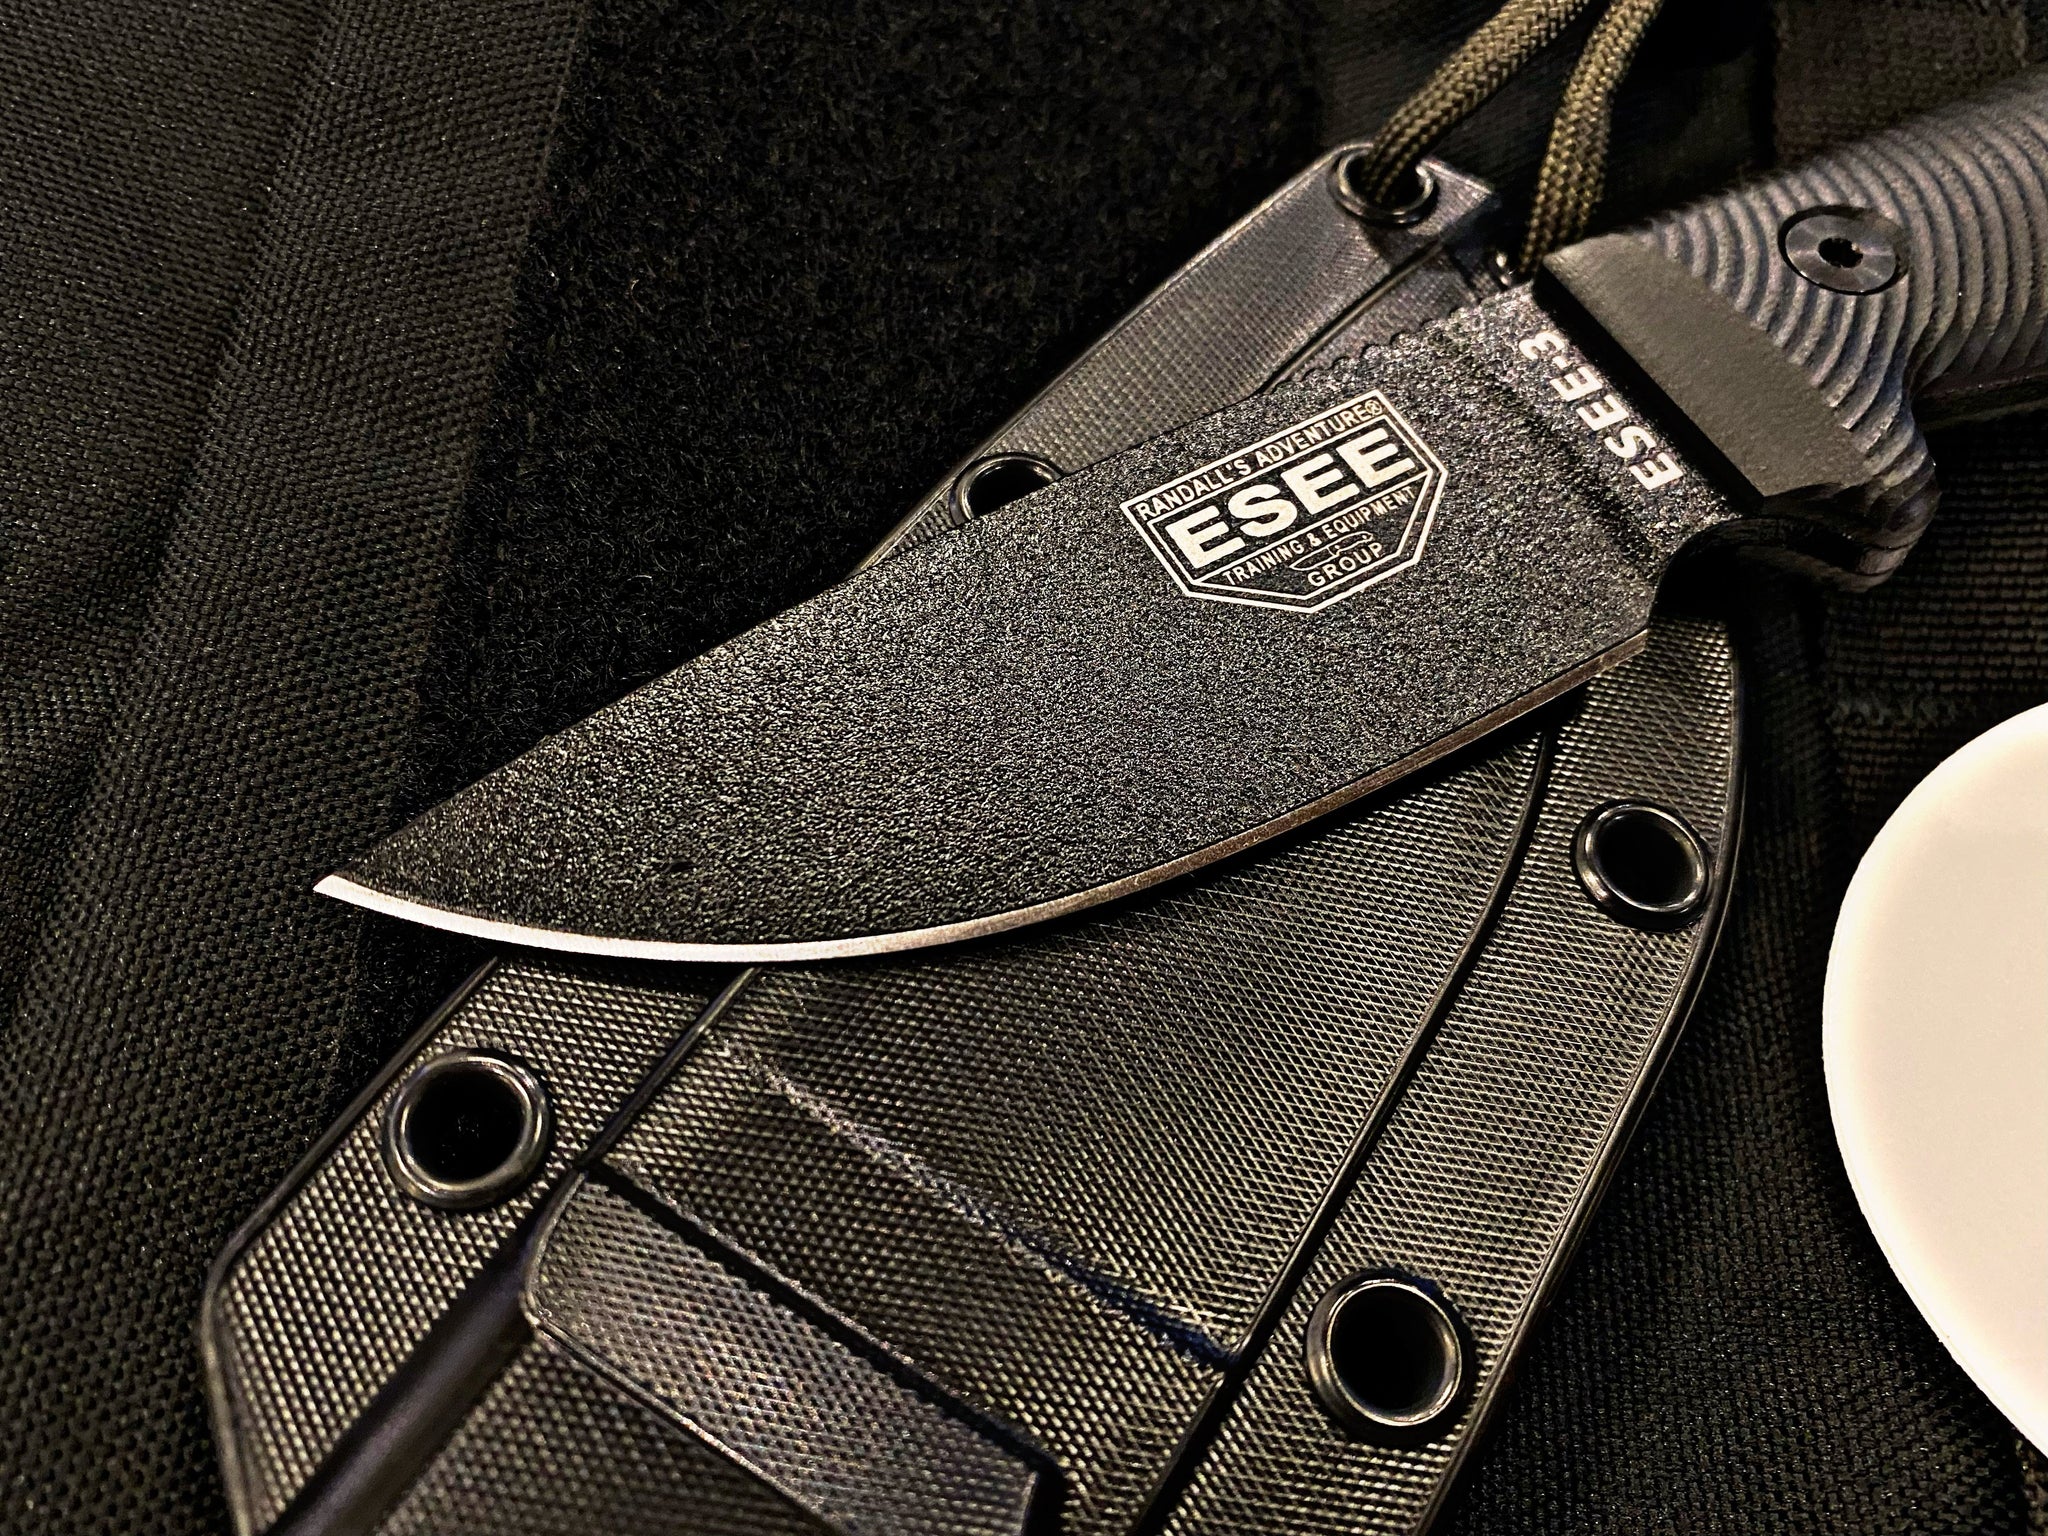 Esee Knives Esee 3 Fixed Blade Black Blade Black G10 Handle 3PMB 001. Nashville Tactical Lounge